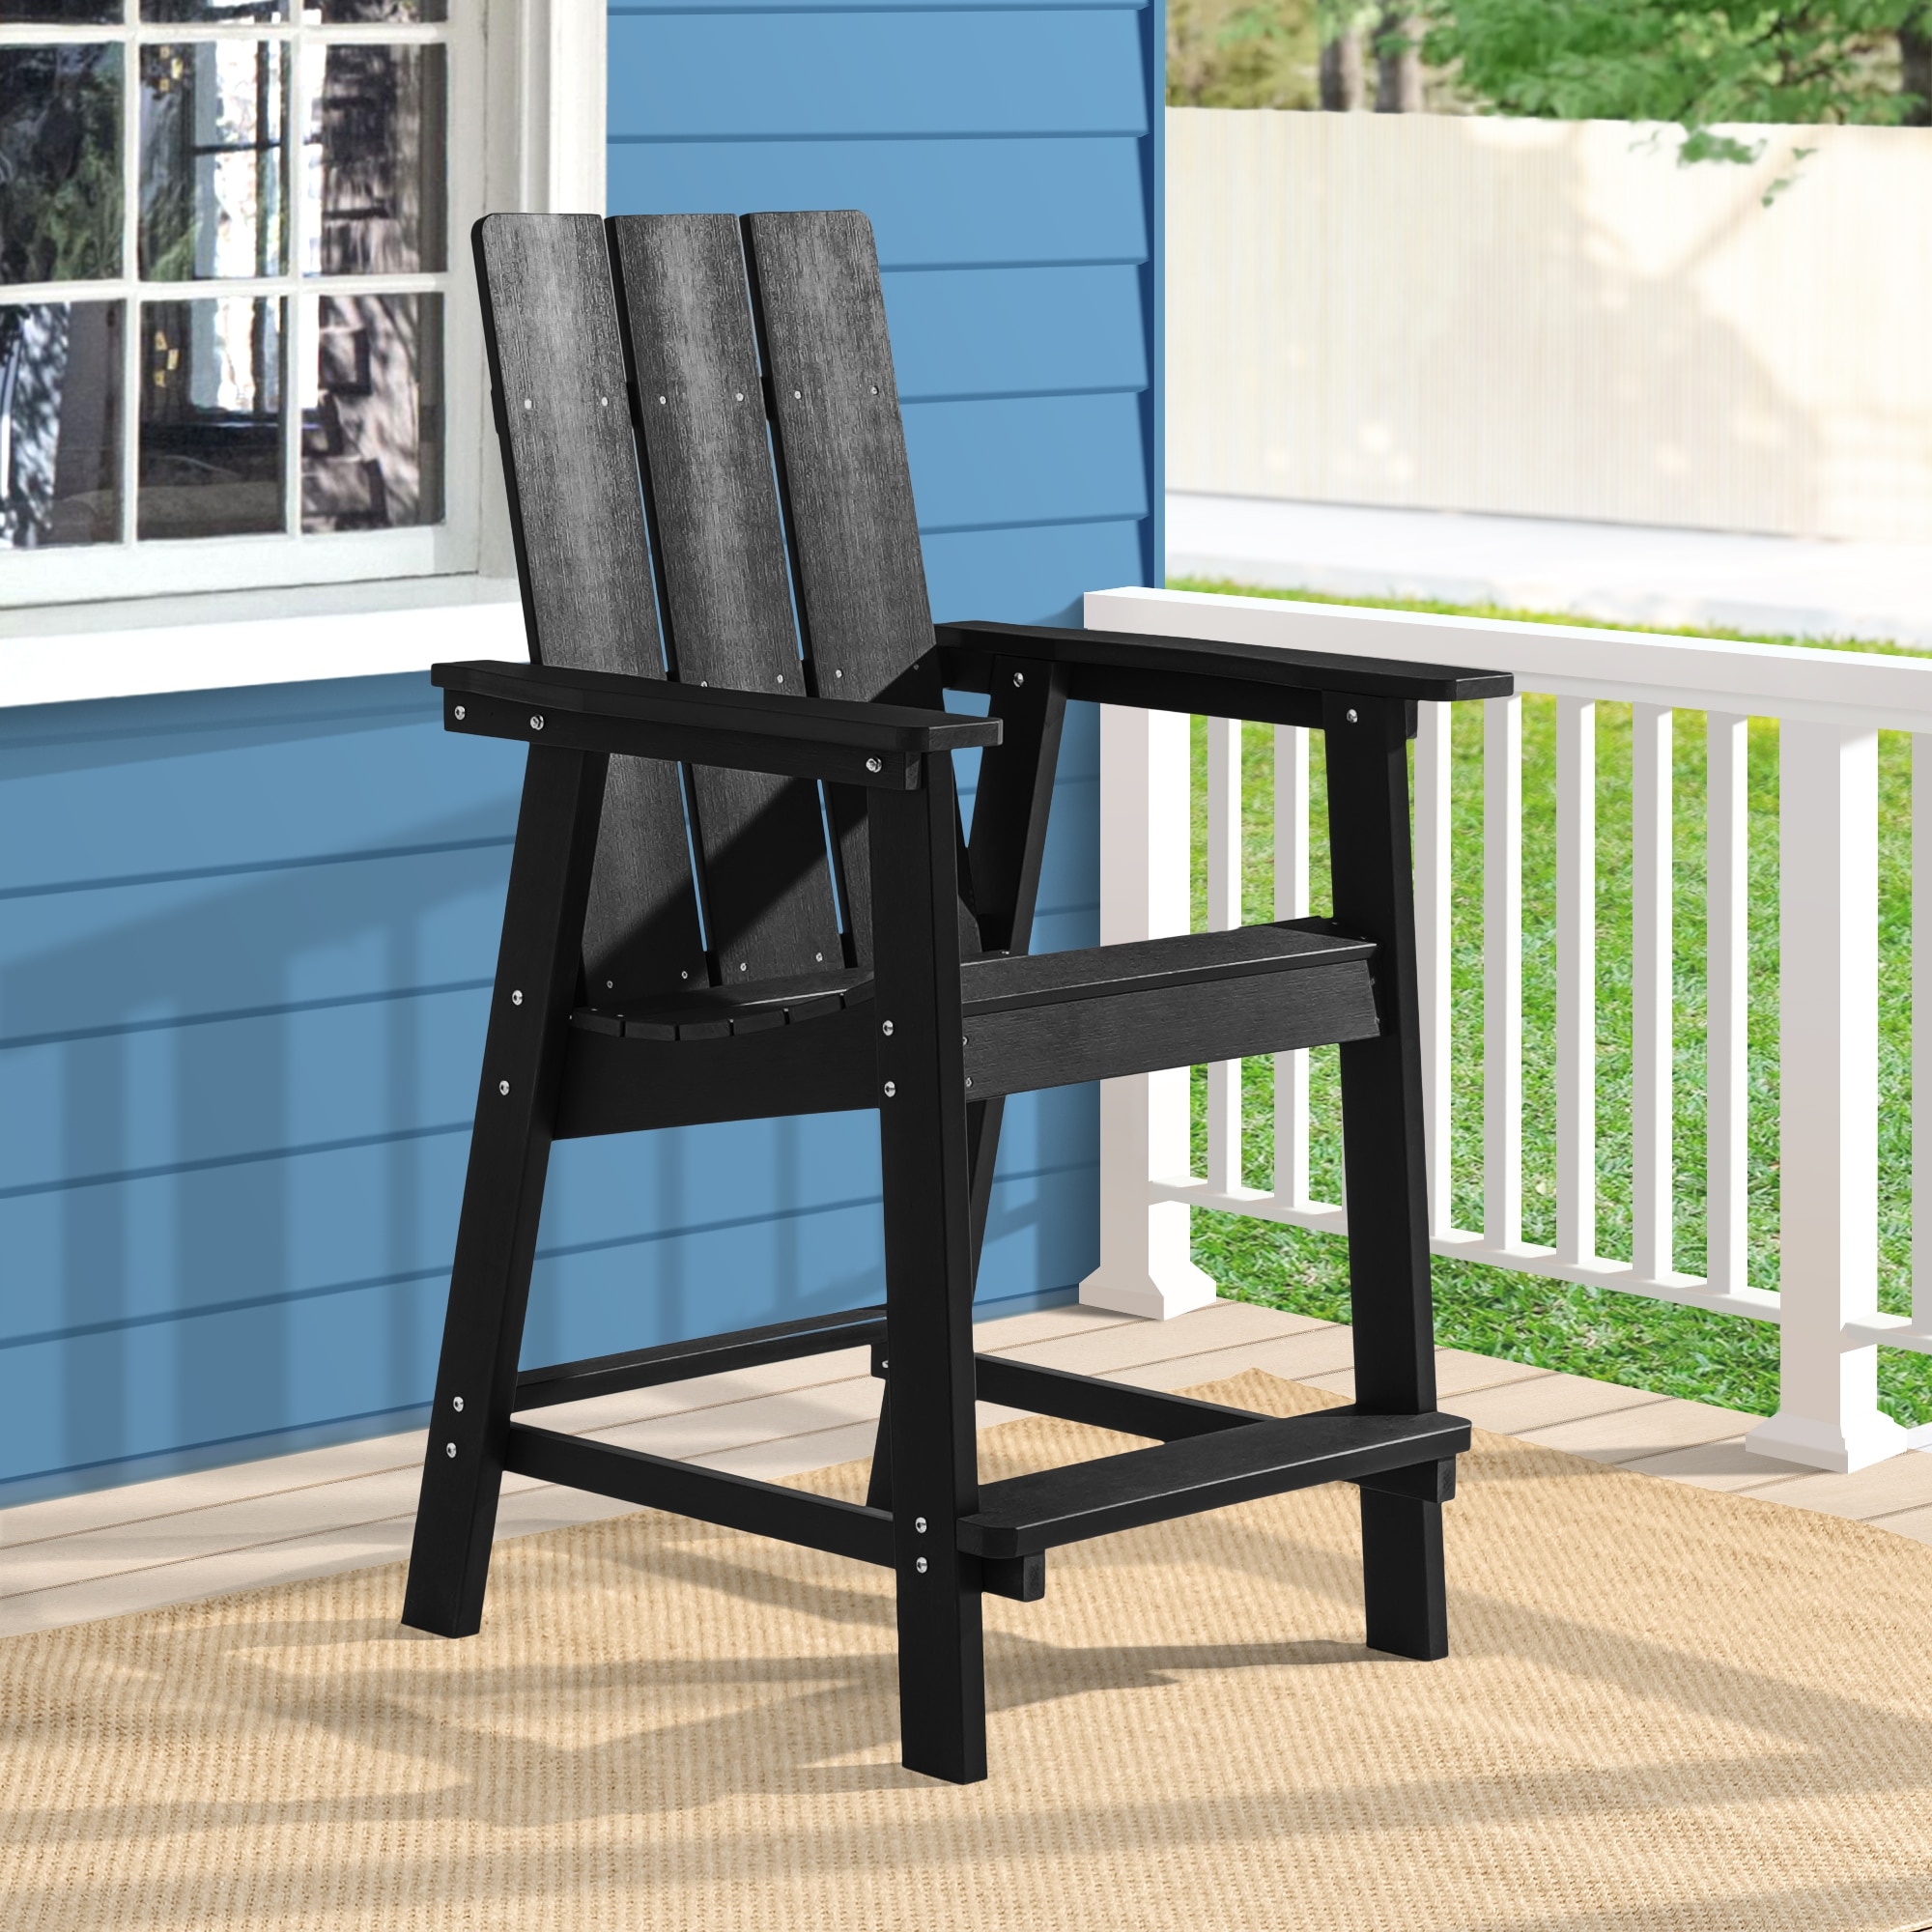 Bonosuki Adirondack Chair Weather Resistant 350lbs Bar Chair Outdoor